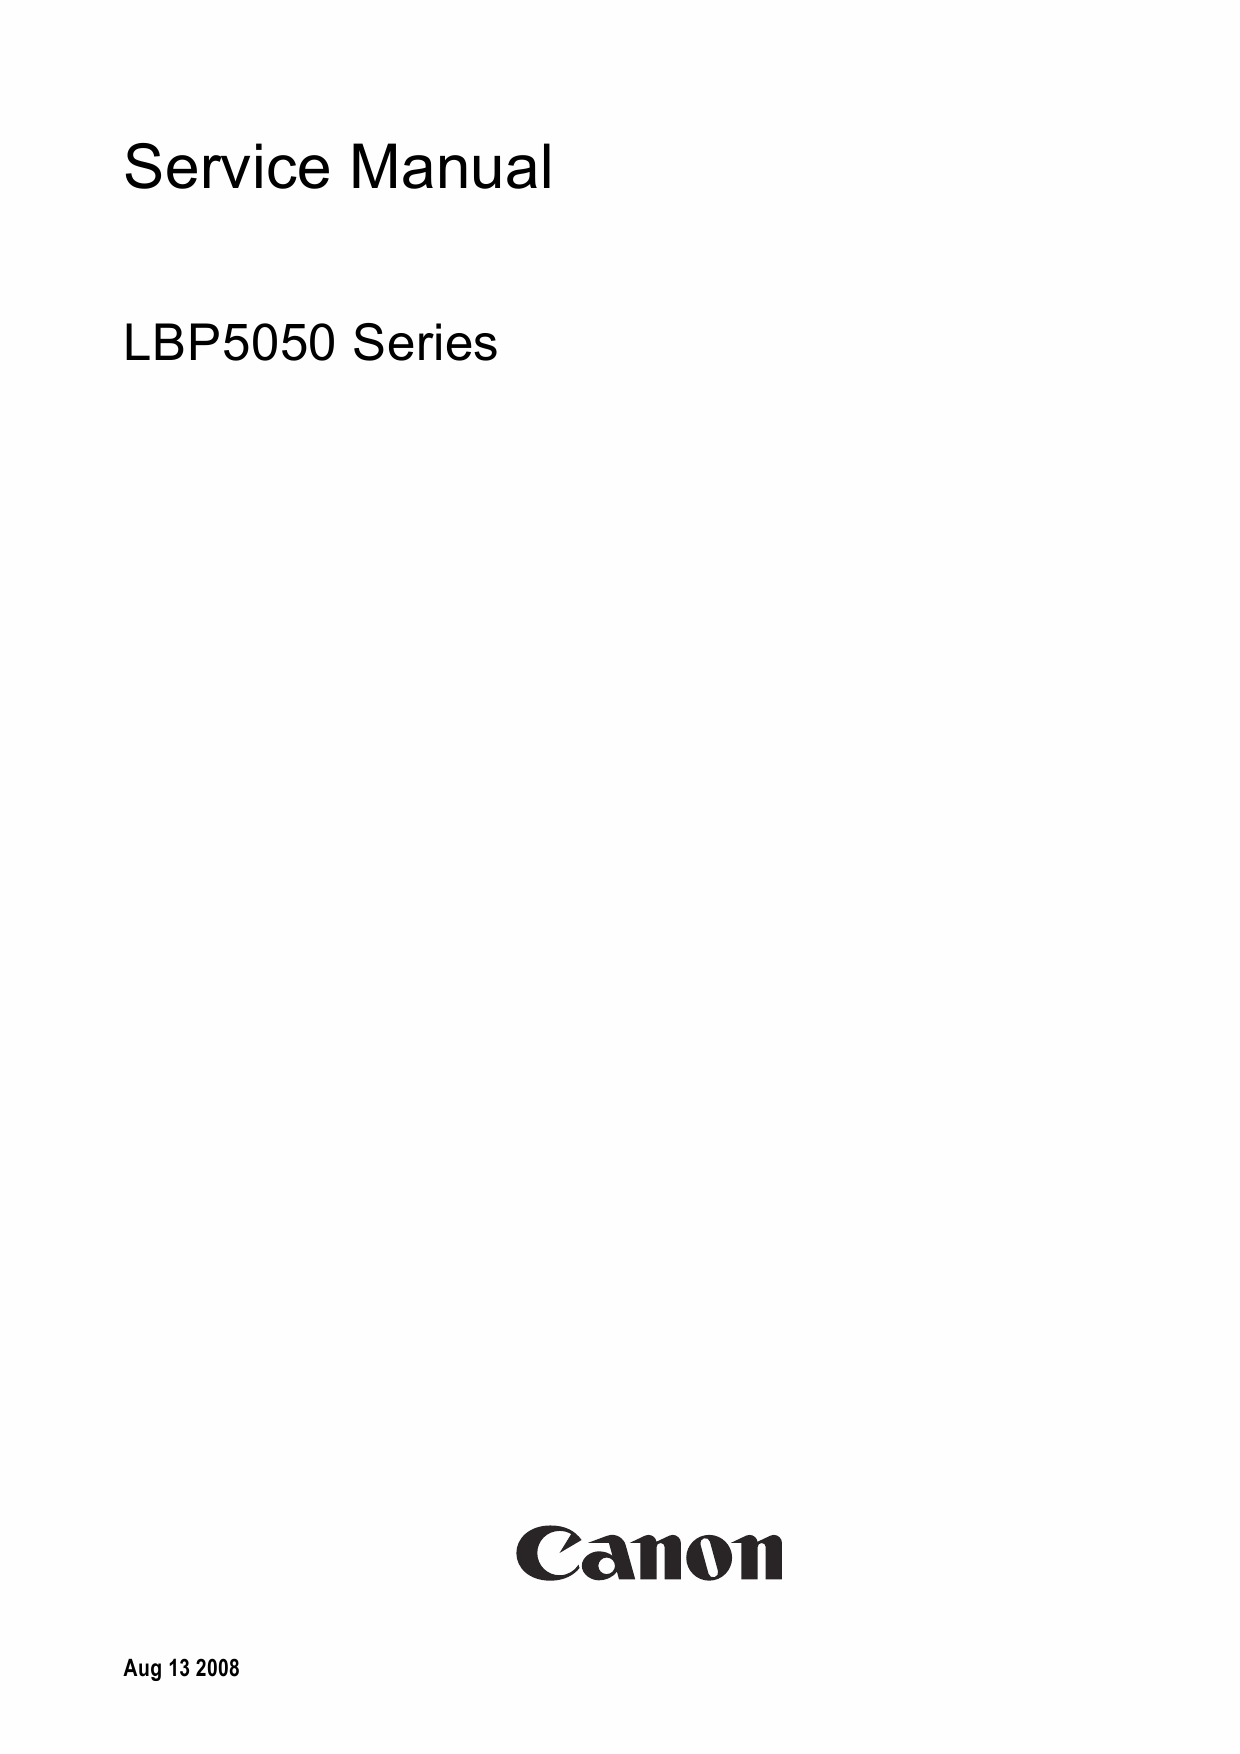 Canon imageCLASS LBP-5050 Service Manual-1